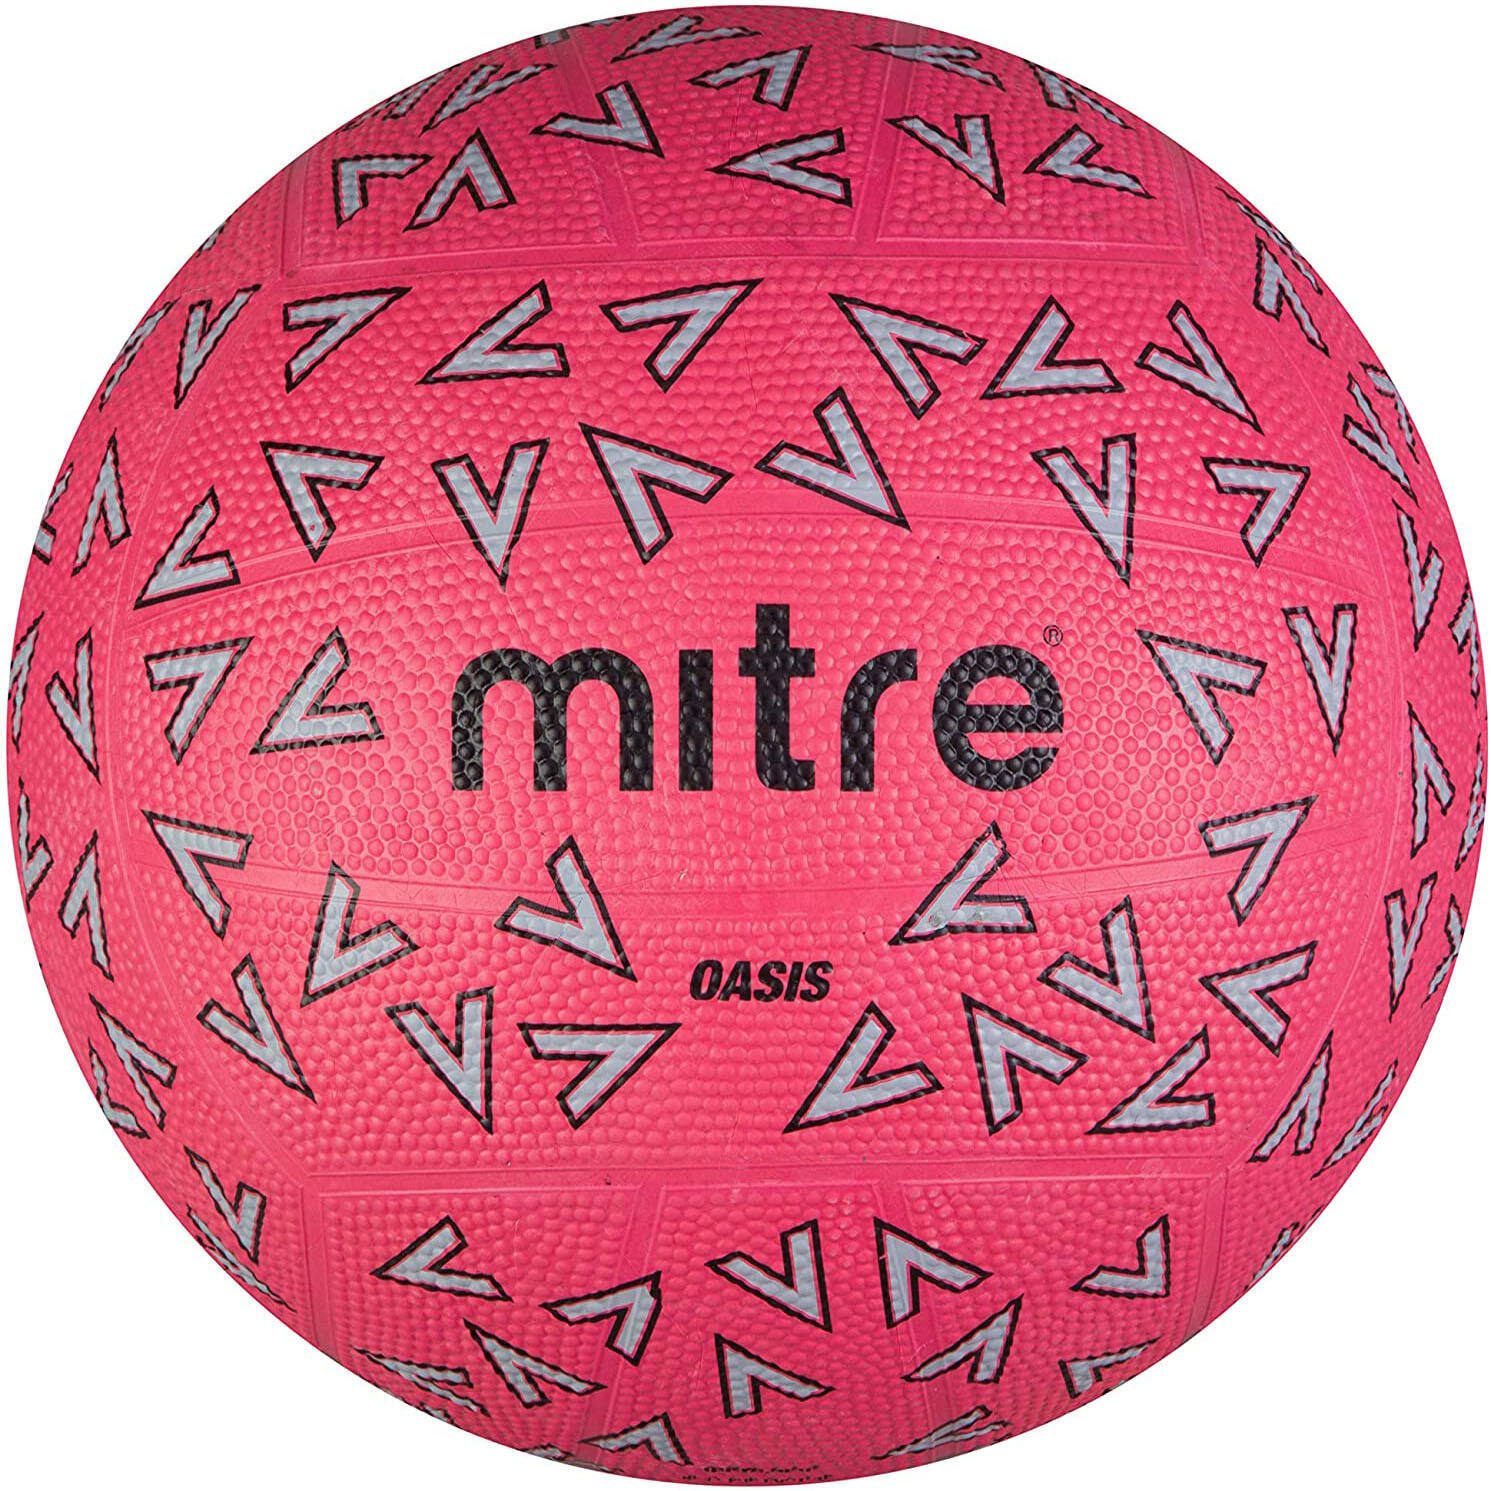 MITRE Oasis Netball (Pink/Grey/Black)